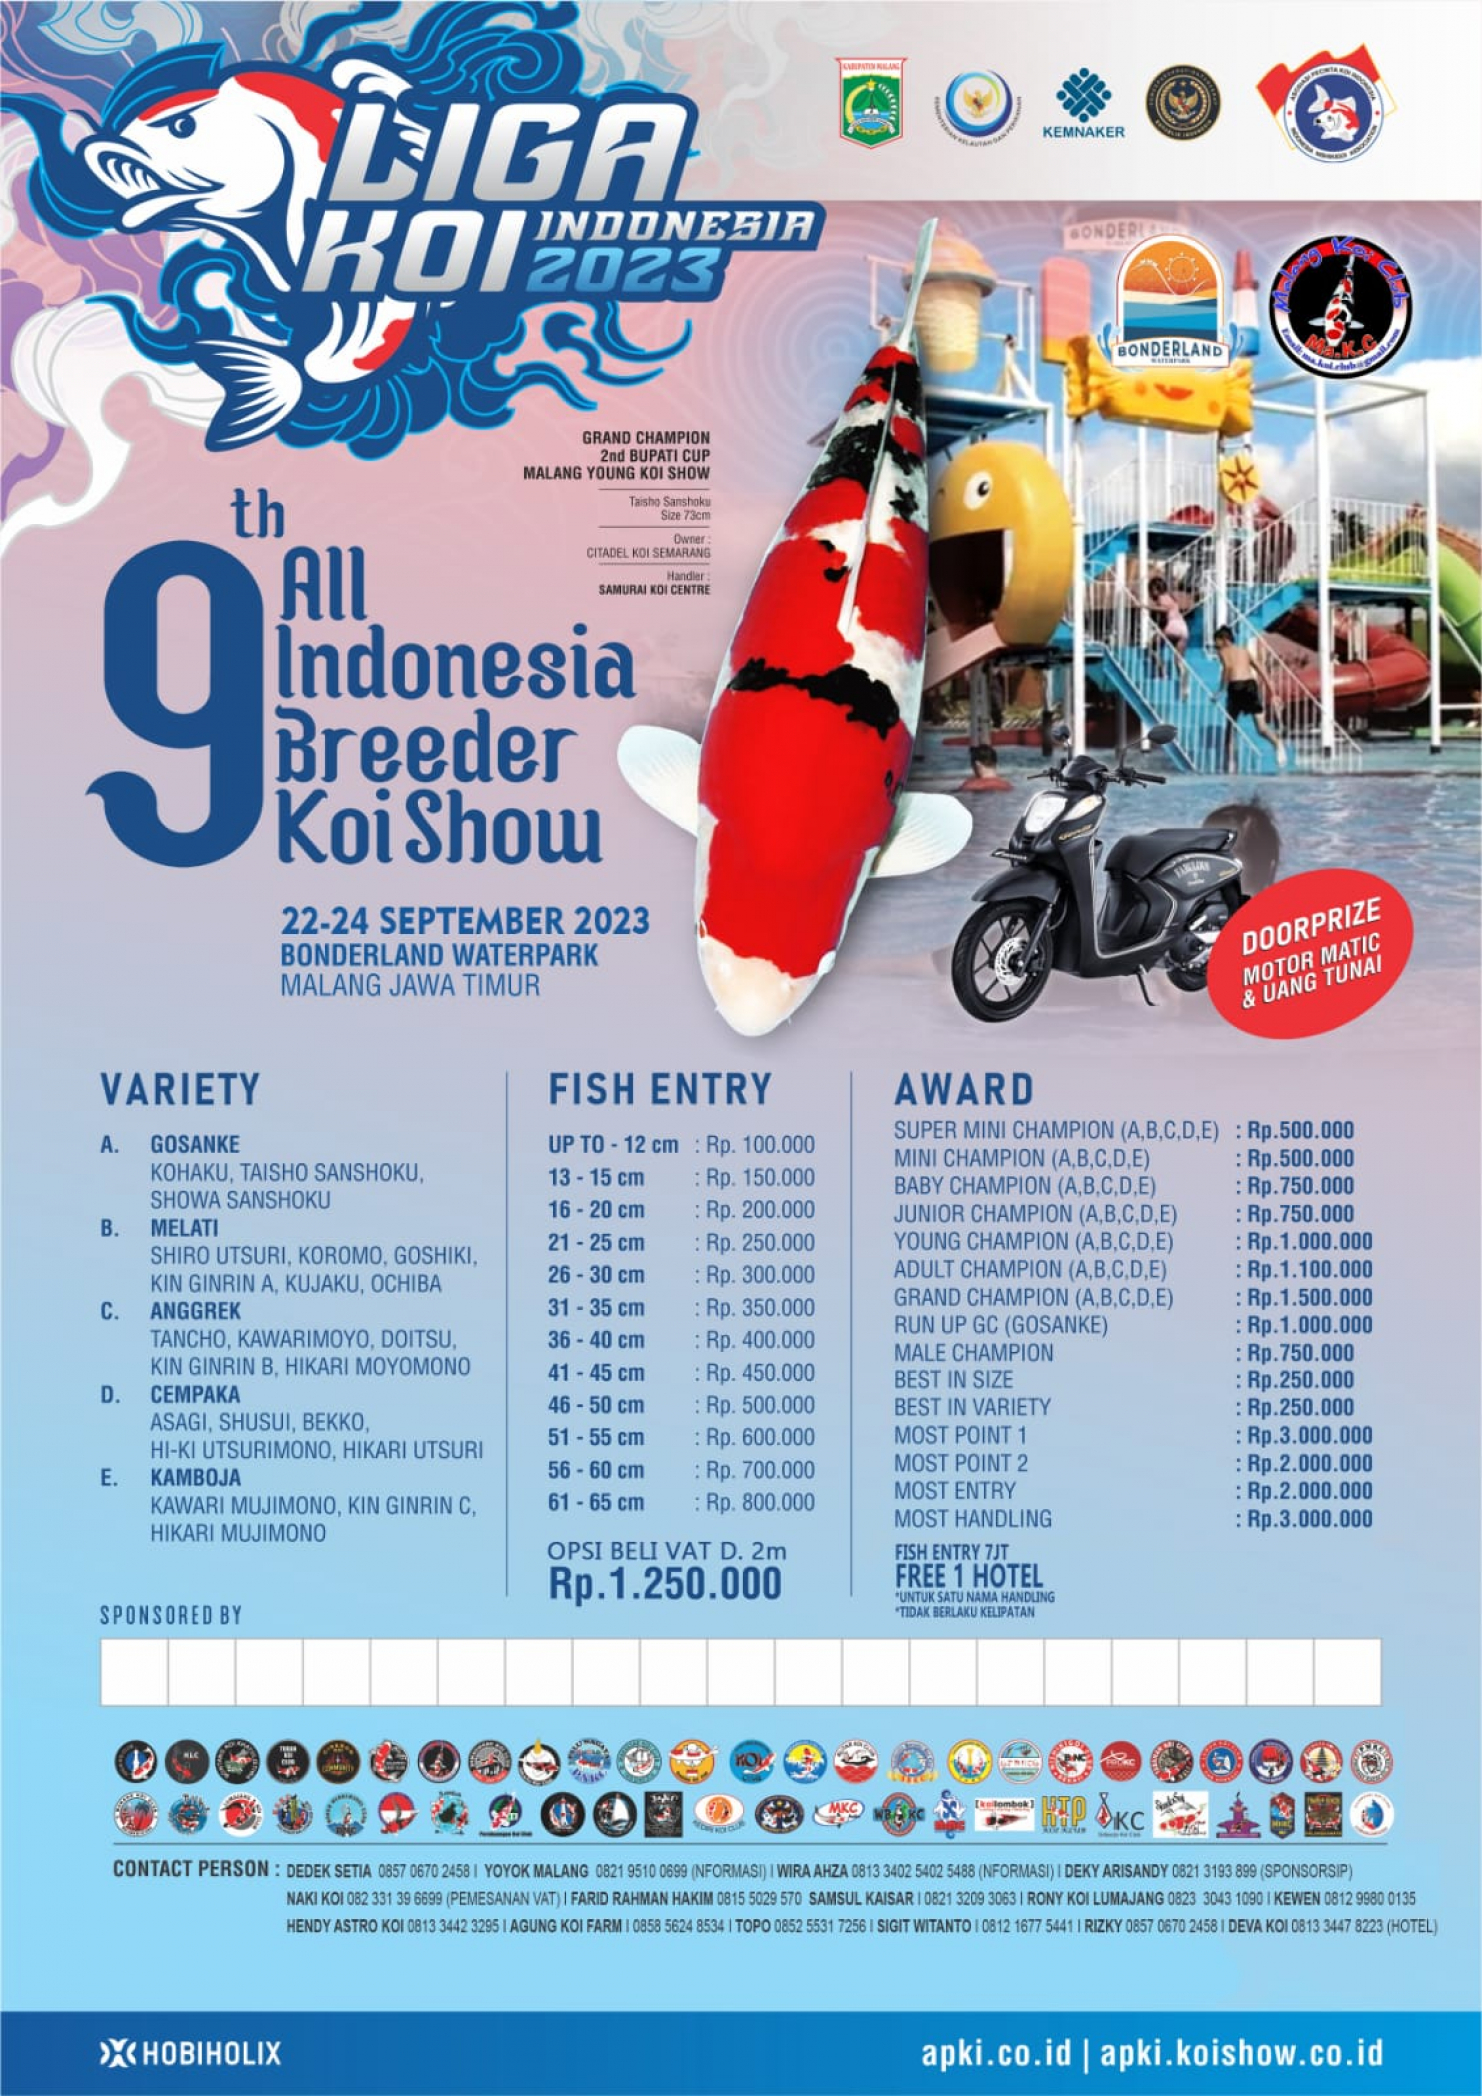 9th All Indonesia Breeder Koi Show 2023